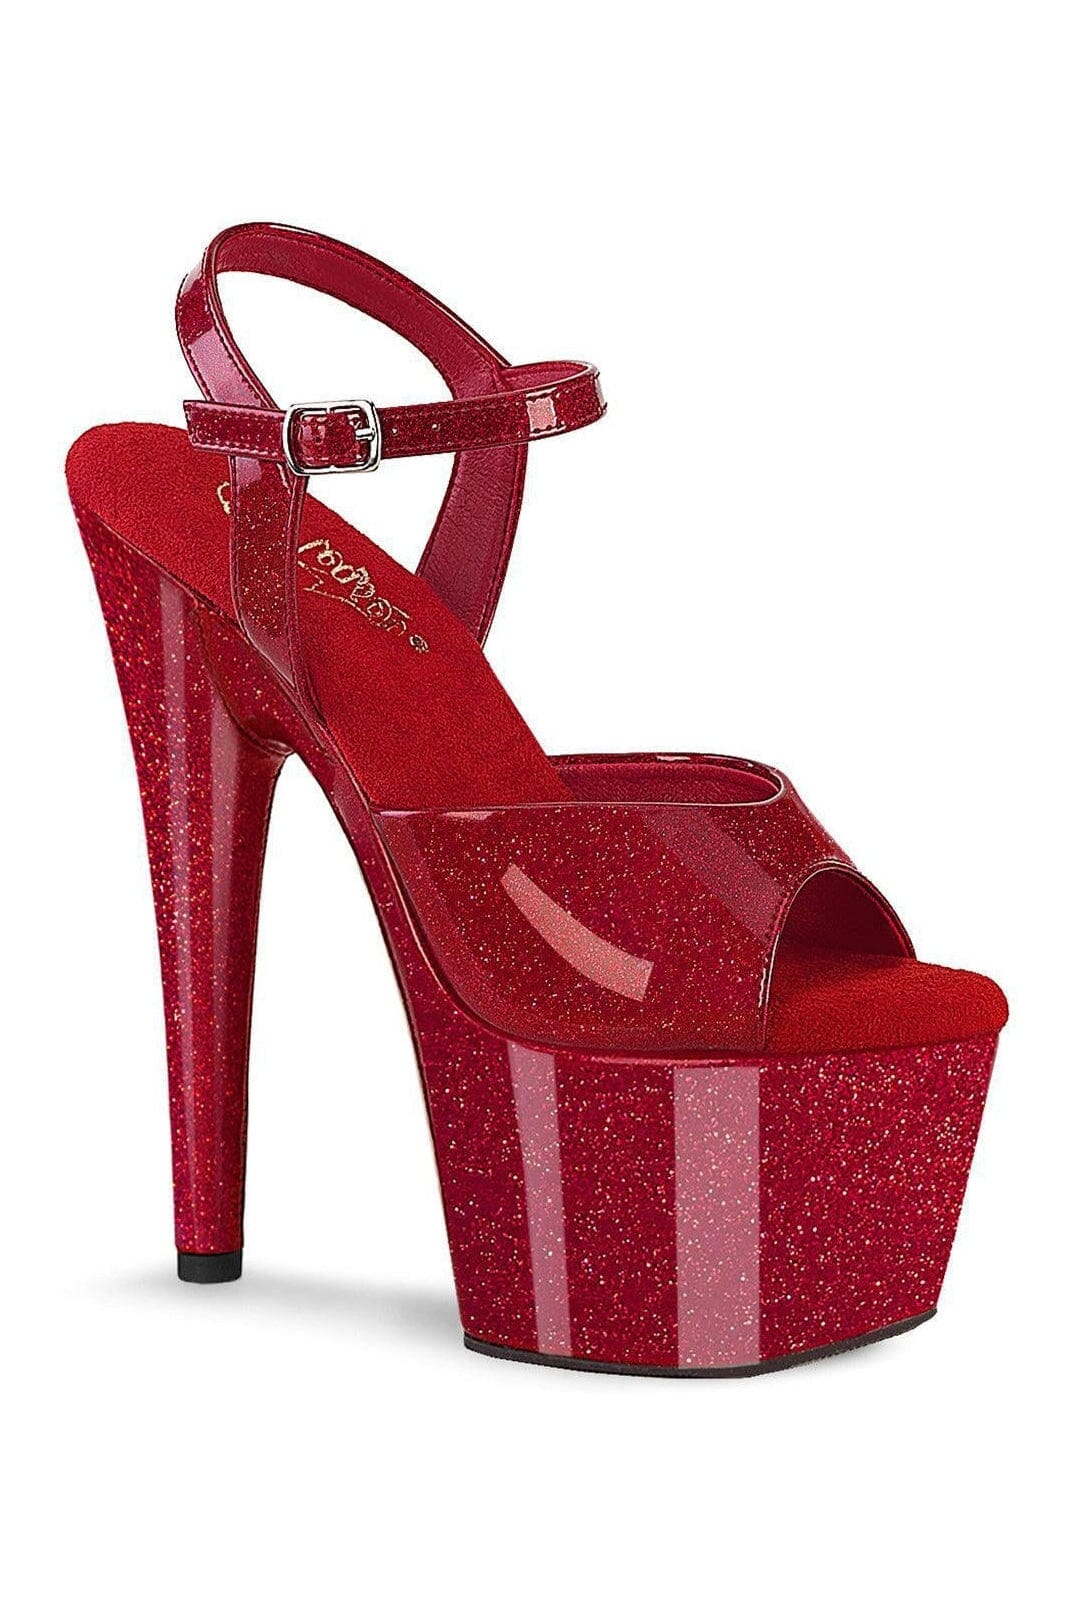 Pleaser Red Sandals Platform Stripper Shoes | Buy at Sexyshoes.com